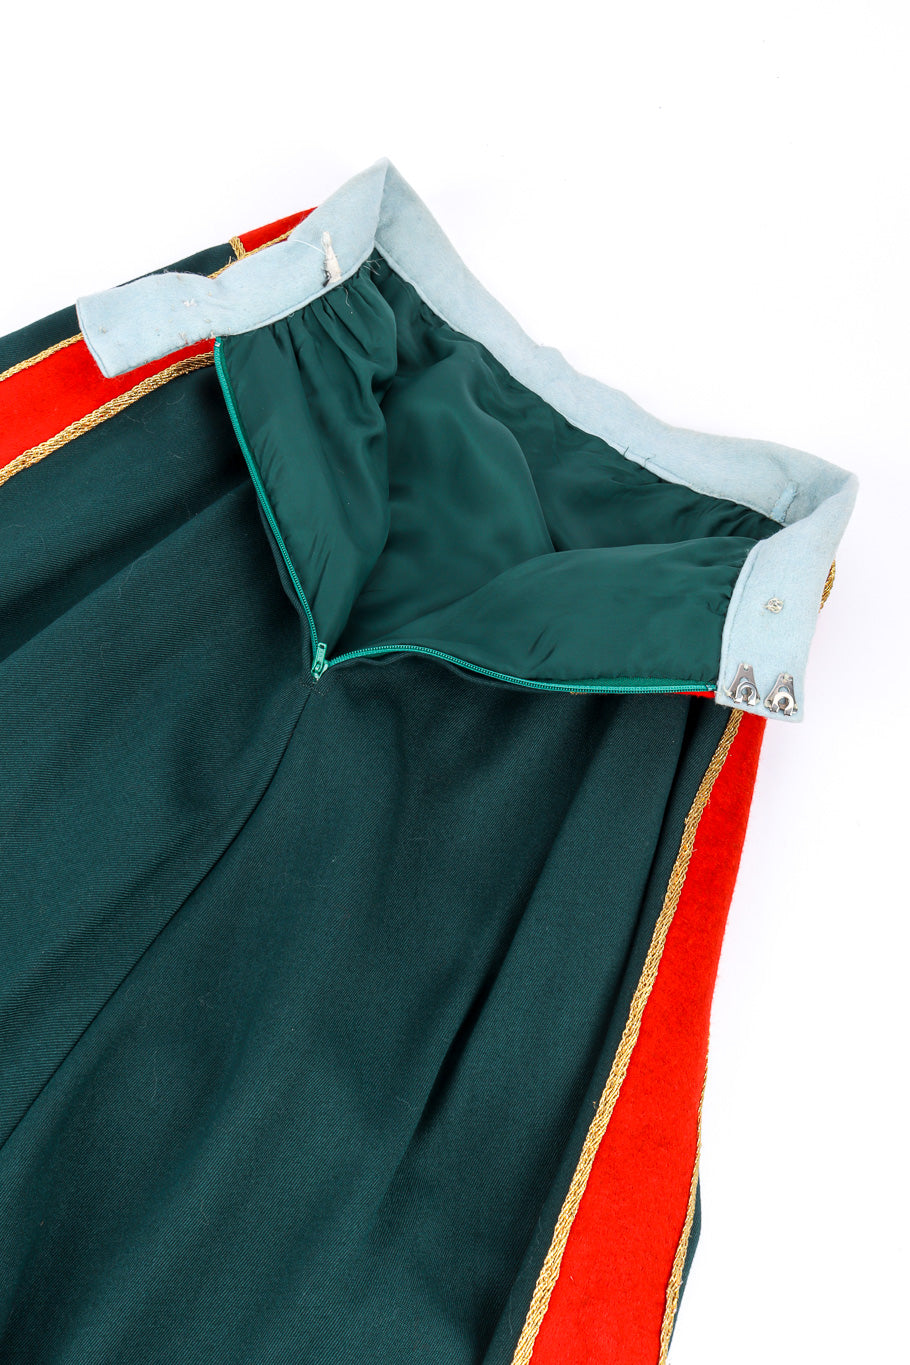 Vintage Malcolm Starr Elephant Maxi Skirt unzipped lining @recessla